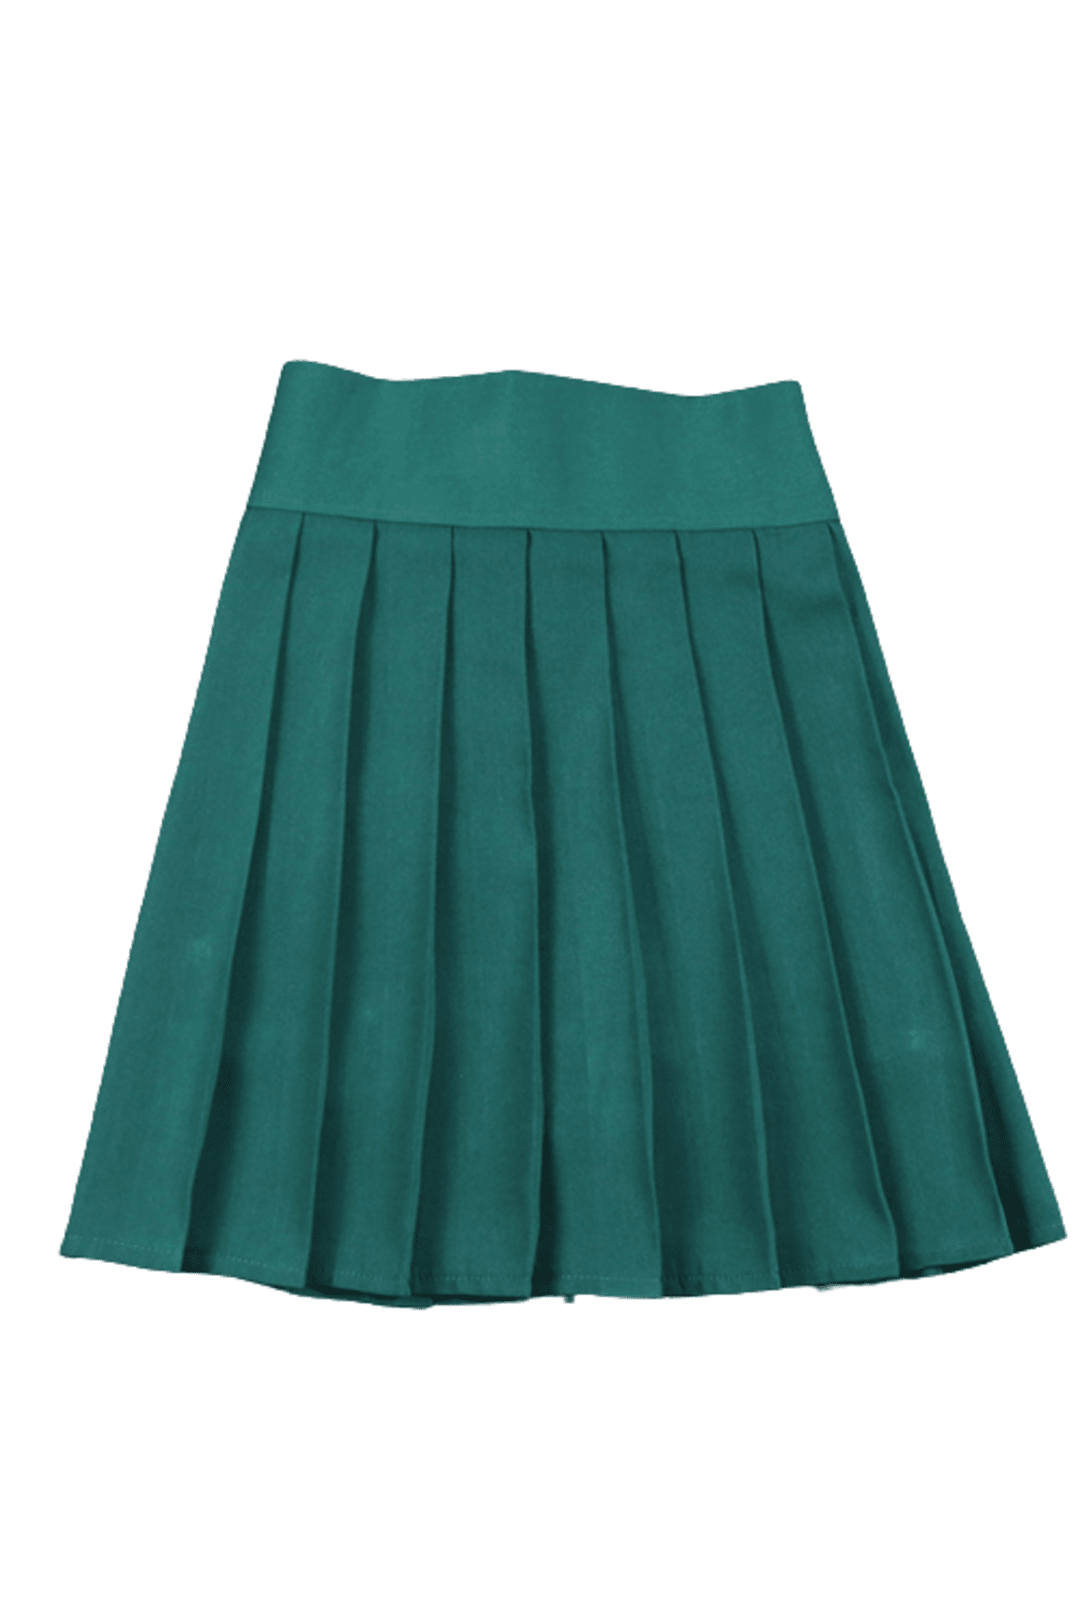 Green School Pleated Skirt